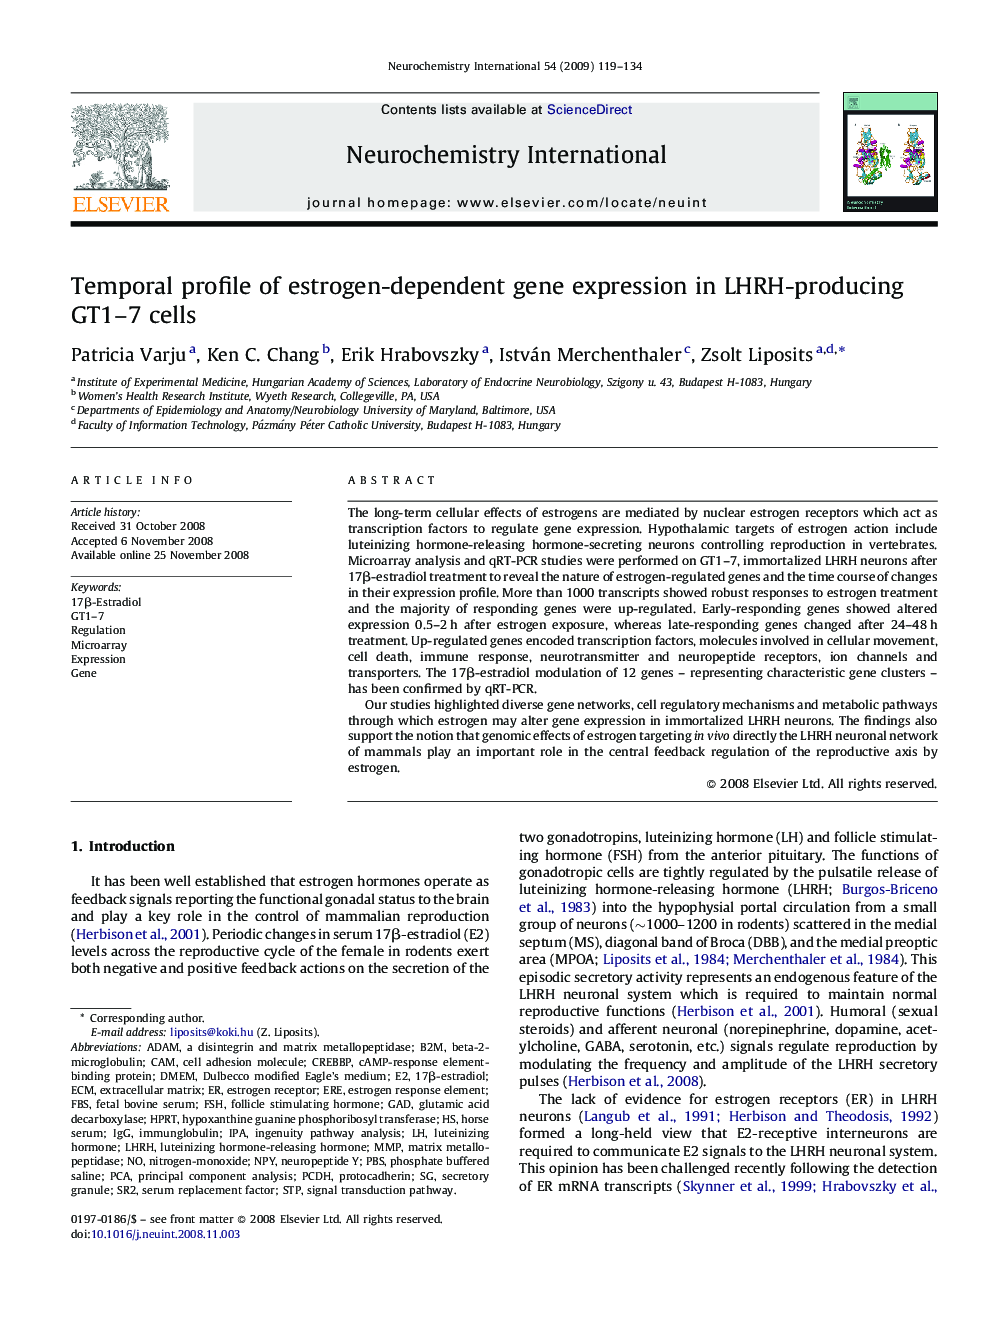 Temporal profile of estrogen-dependent gene expression in LHRH-producing GT1–7 cells